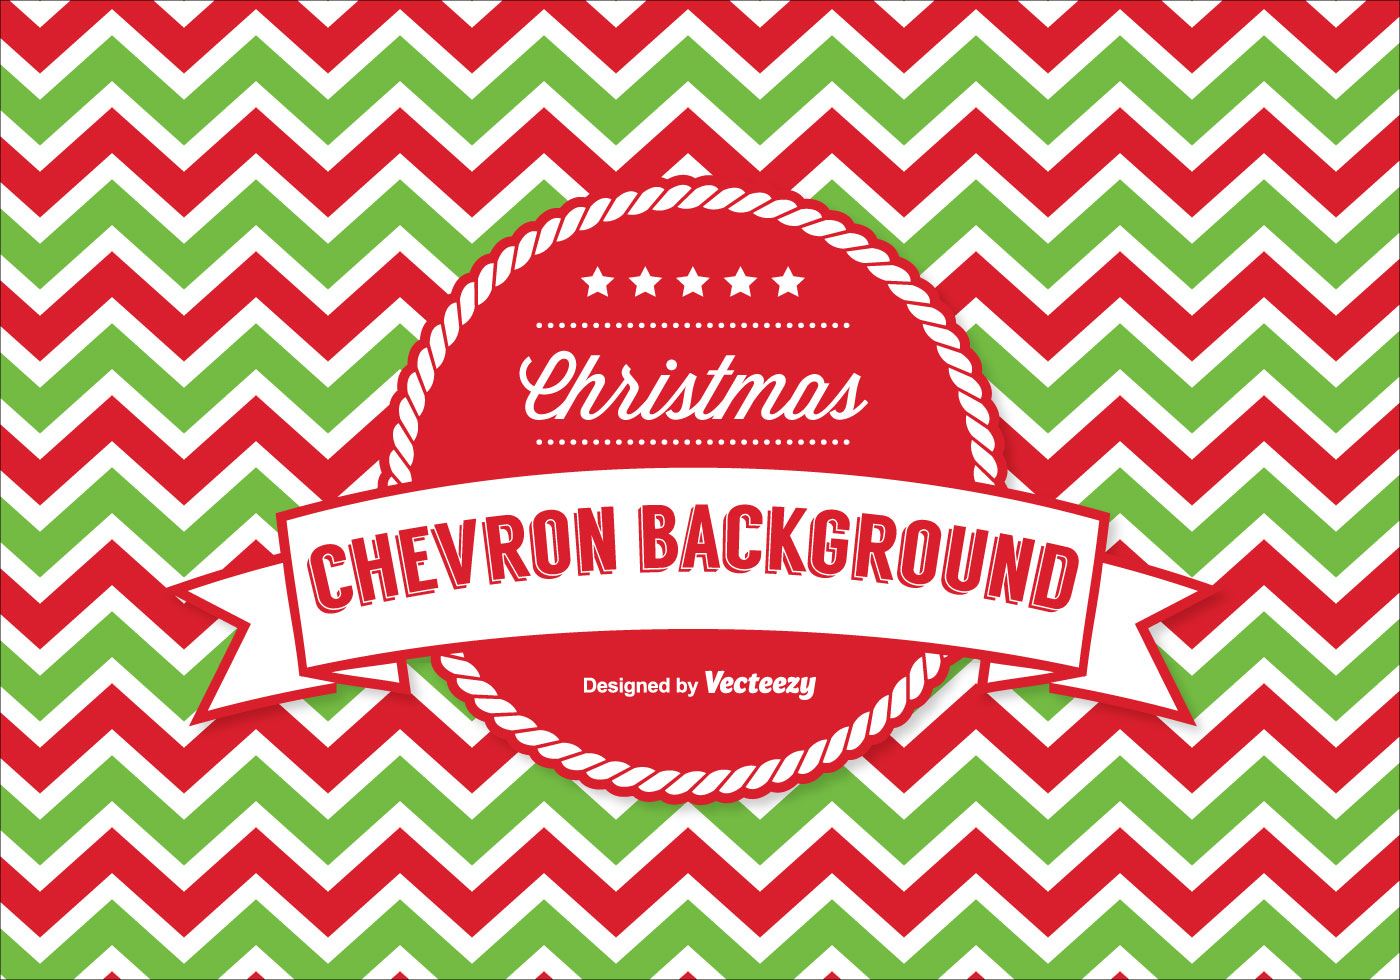 Chevron Pattern Free Vector Art 11521 Free Downloads